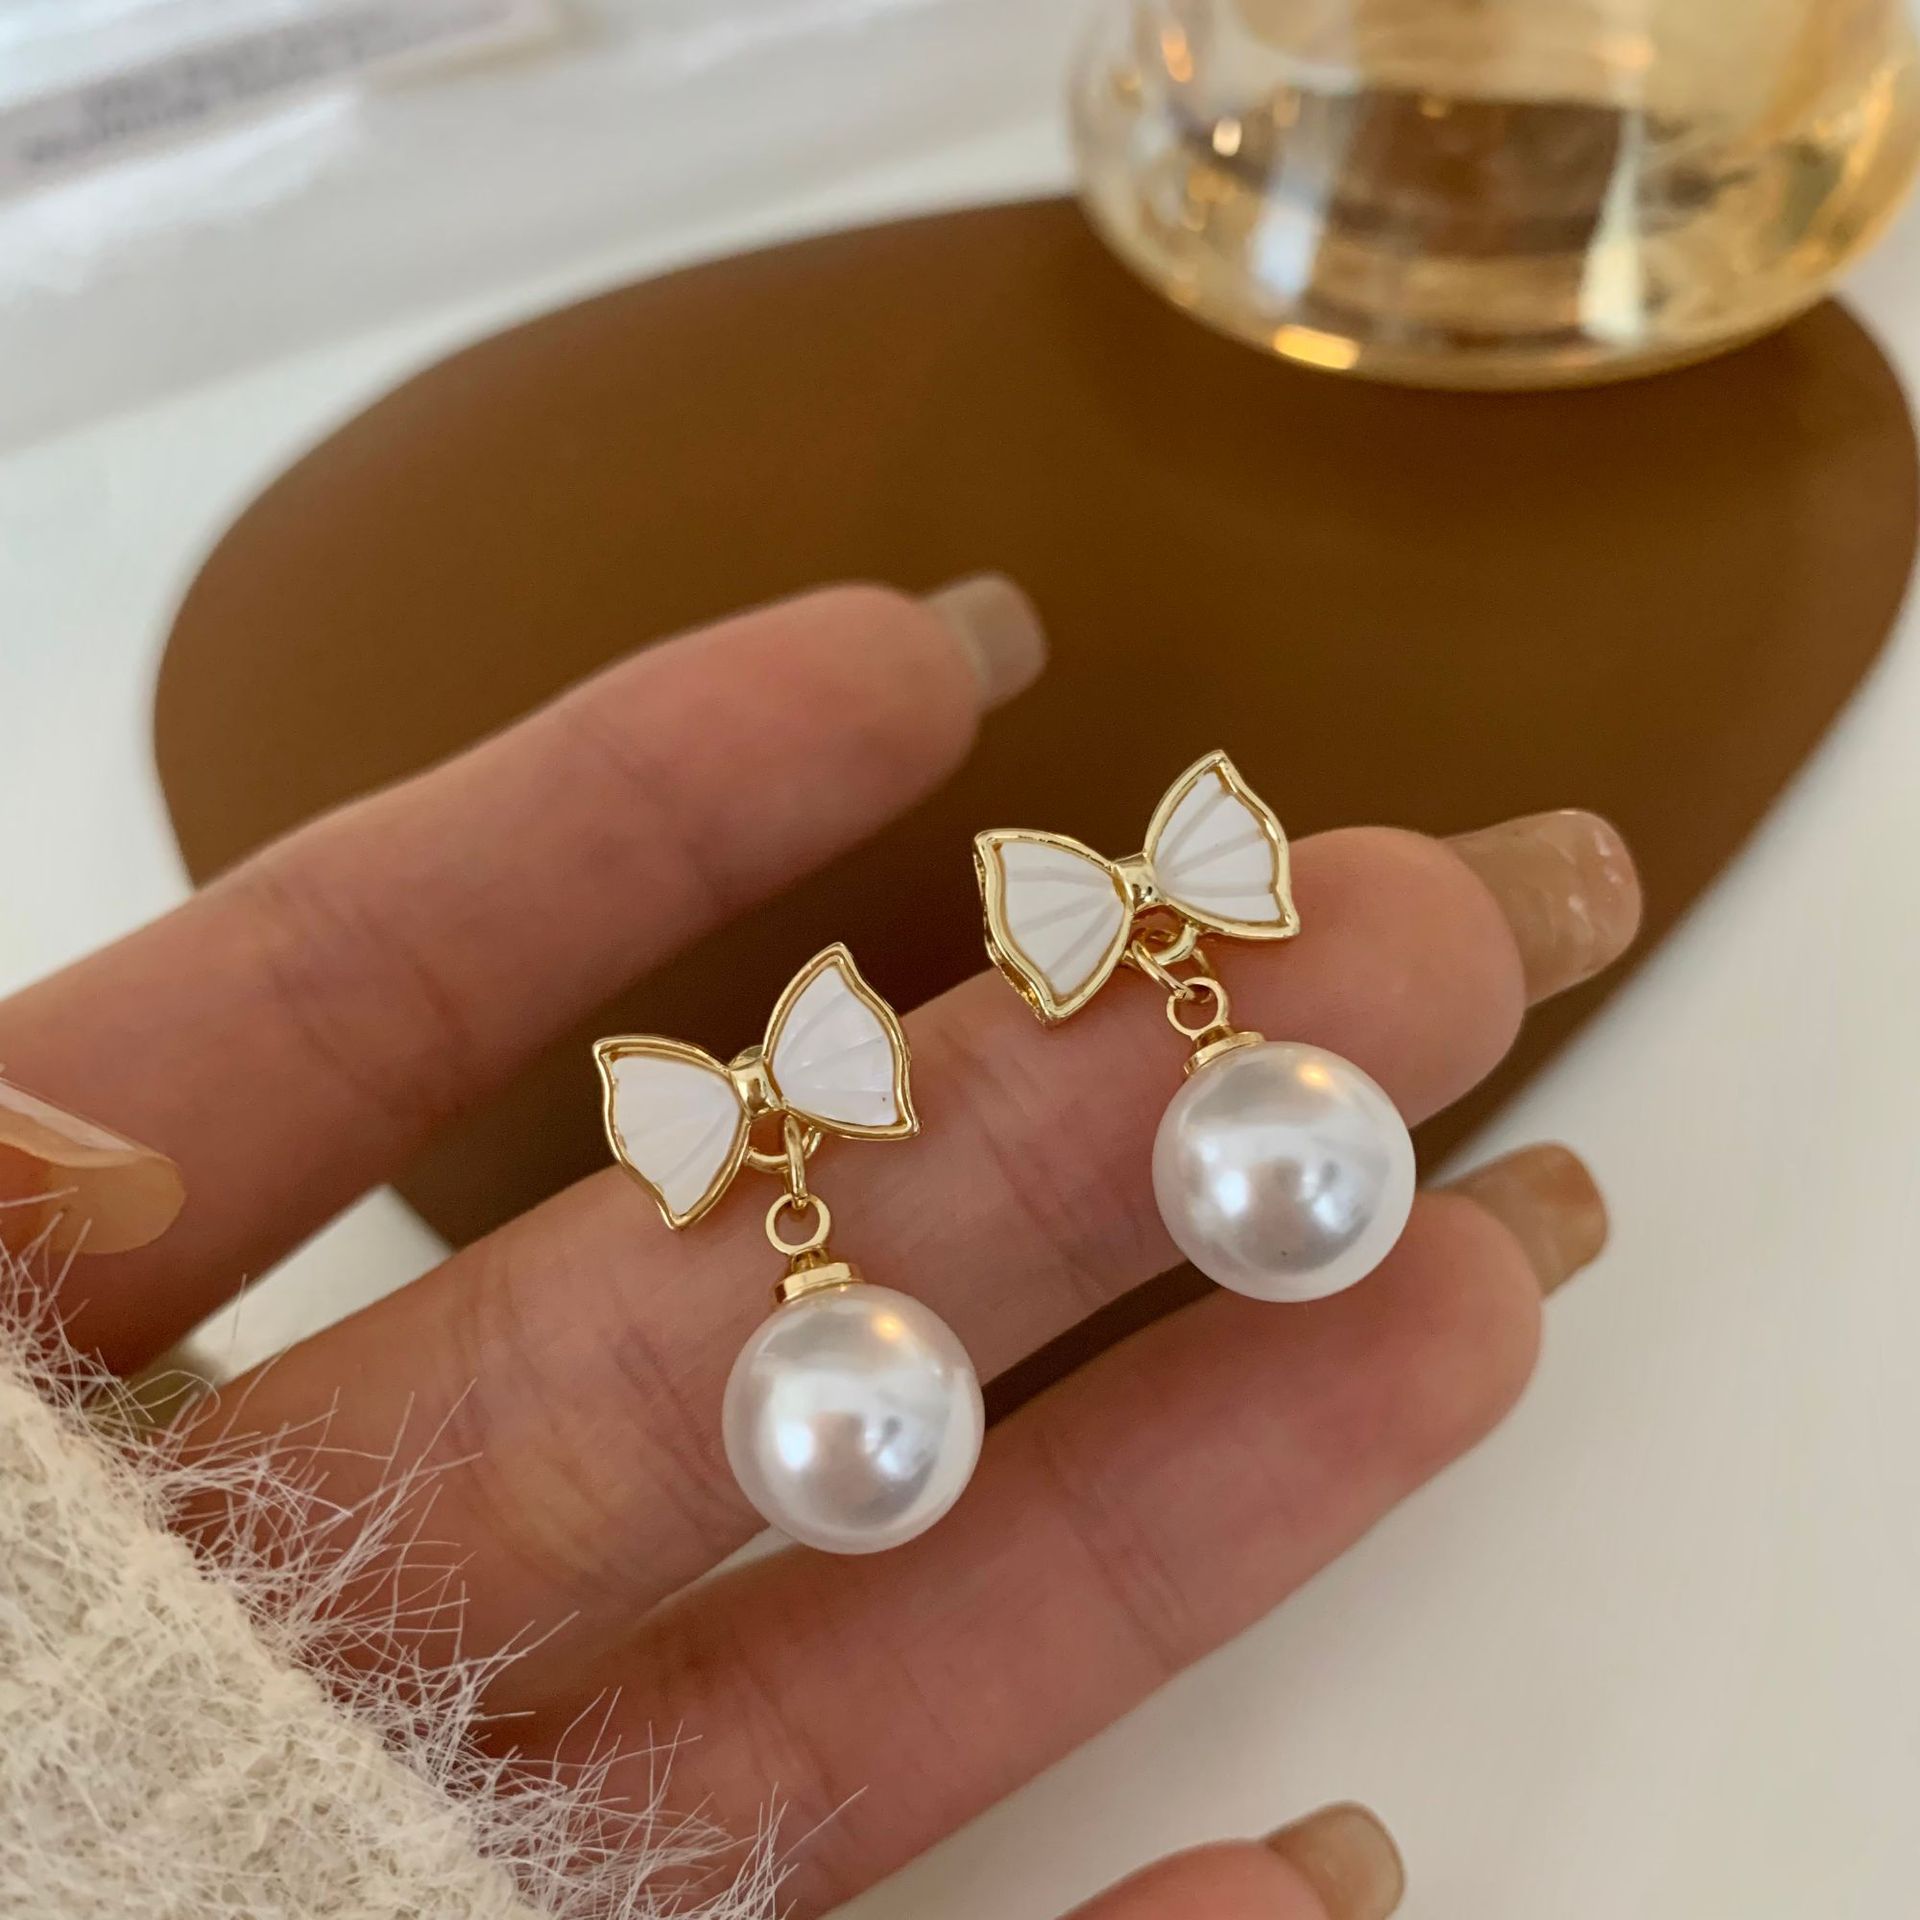 Simple Lady Pearl Ear Clip Earrings South Korean Bow Imitation Pearl Clip on Earrings Non Pirced Ears for Women